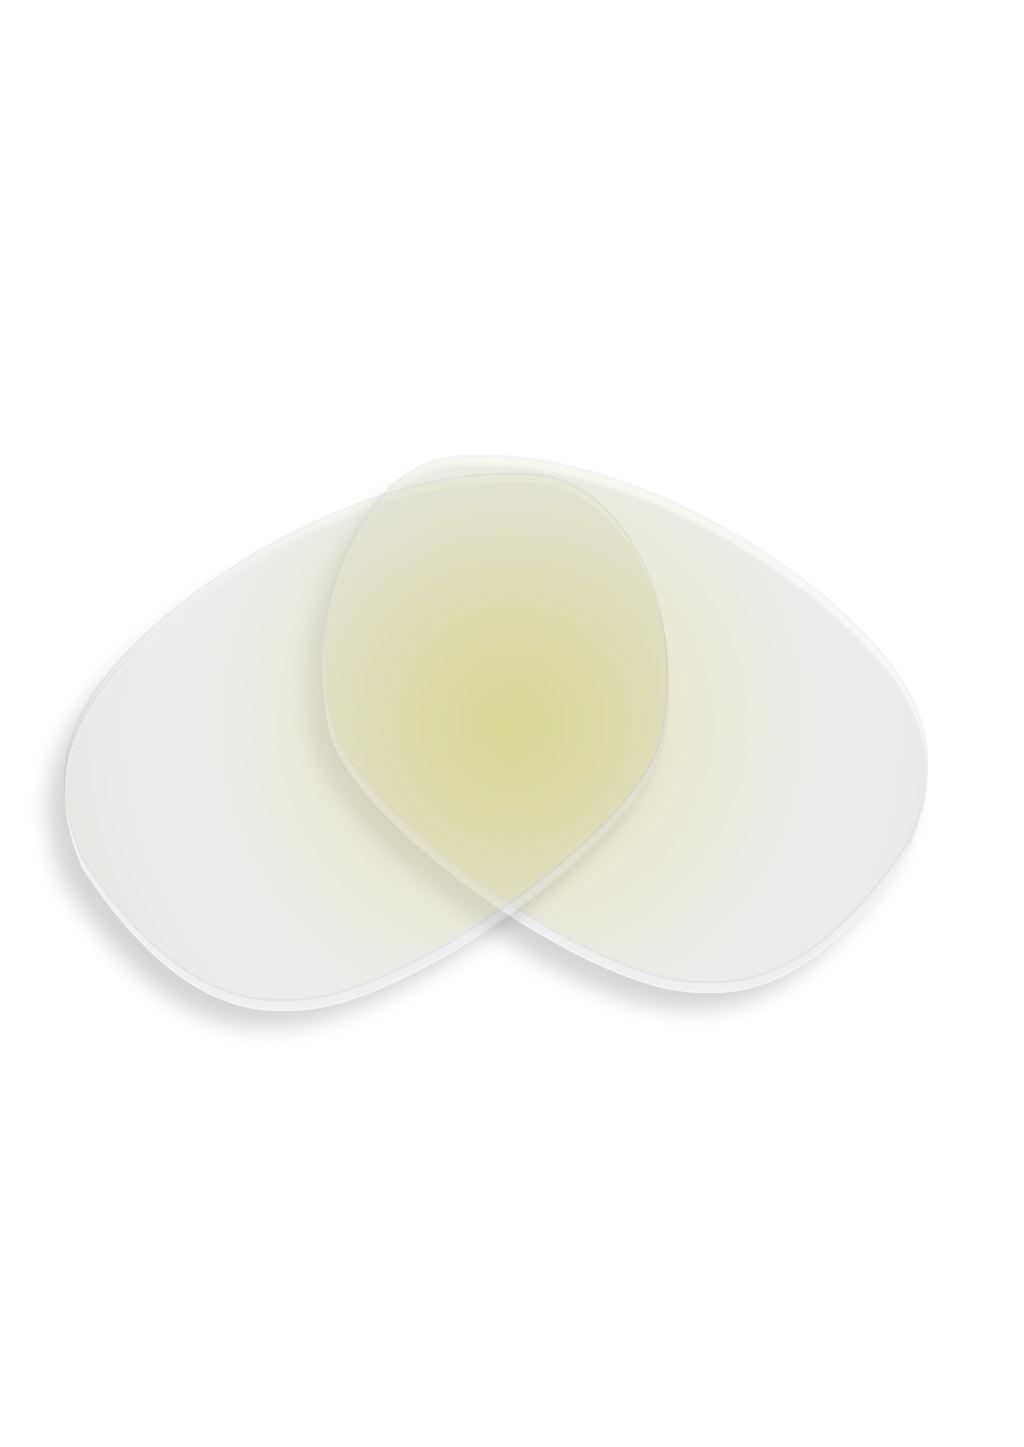 Extra lenses for Titan V2 sunglasses. This is yellow photochromic.